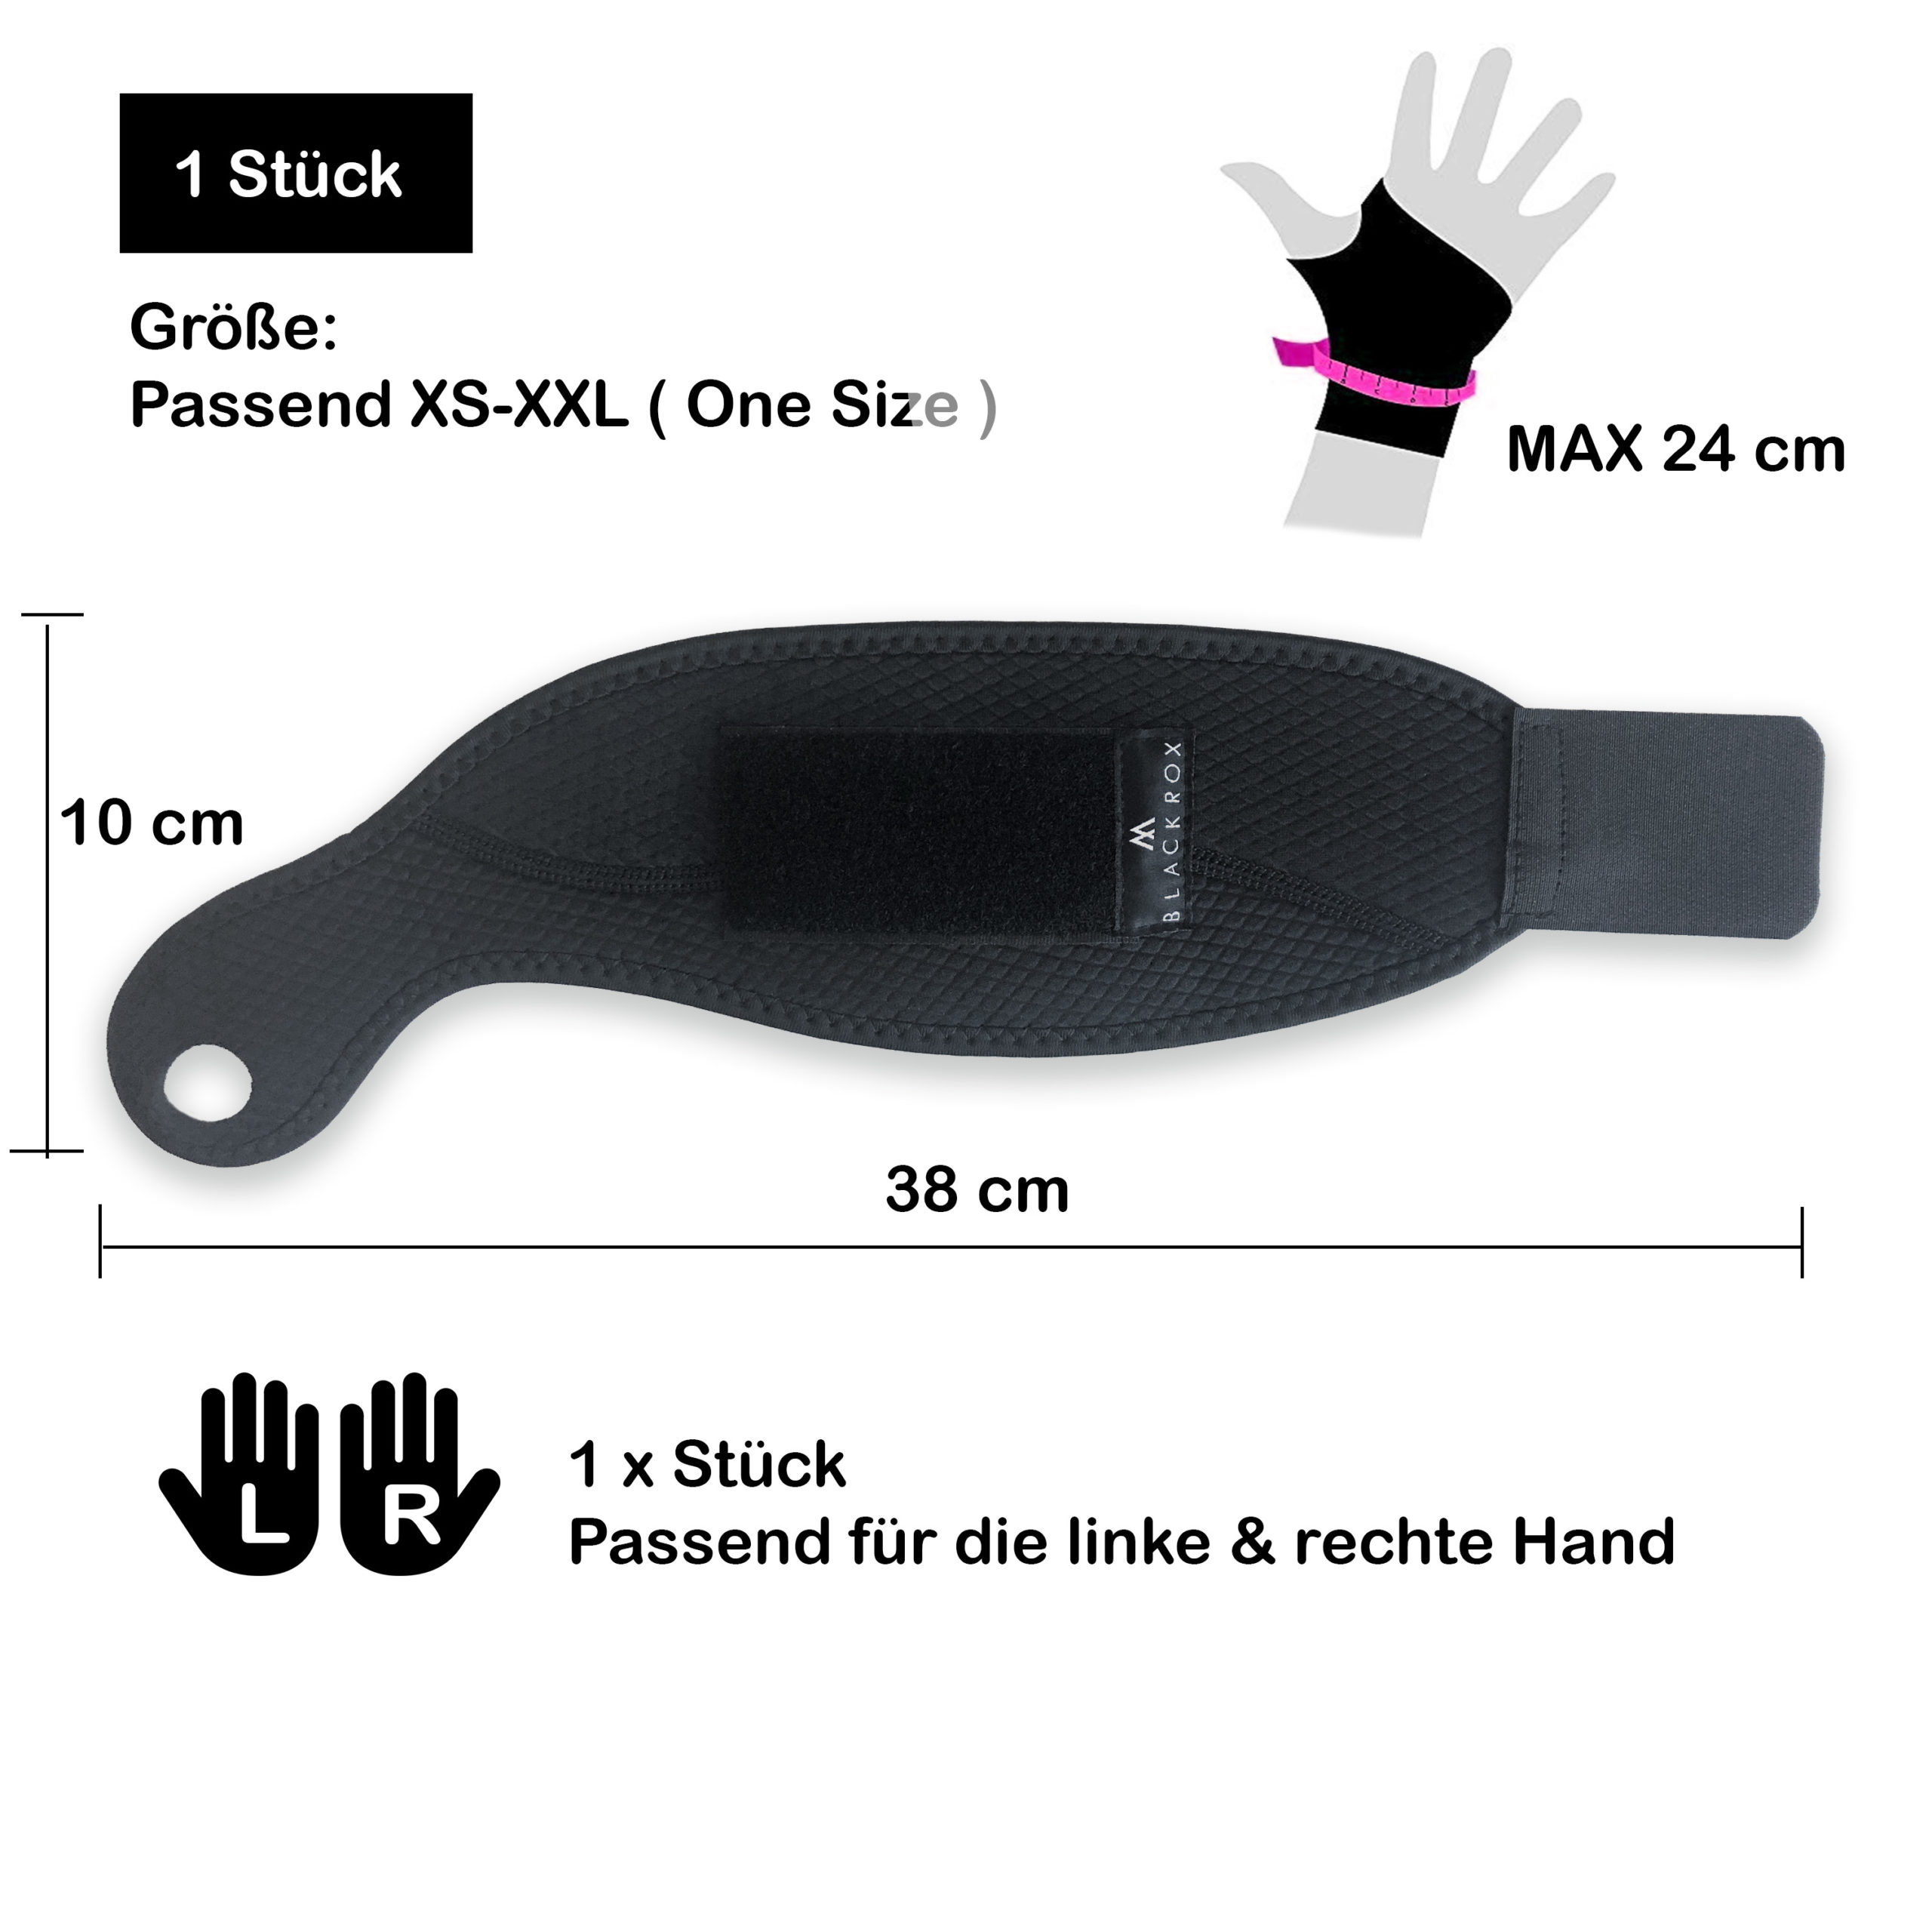 BLACKROX-Handgelenkbandage